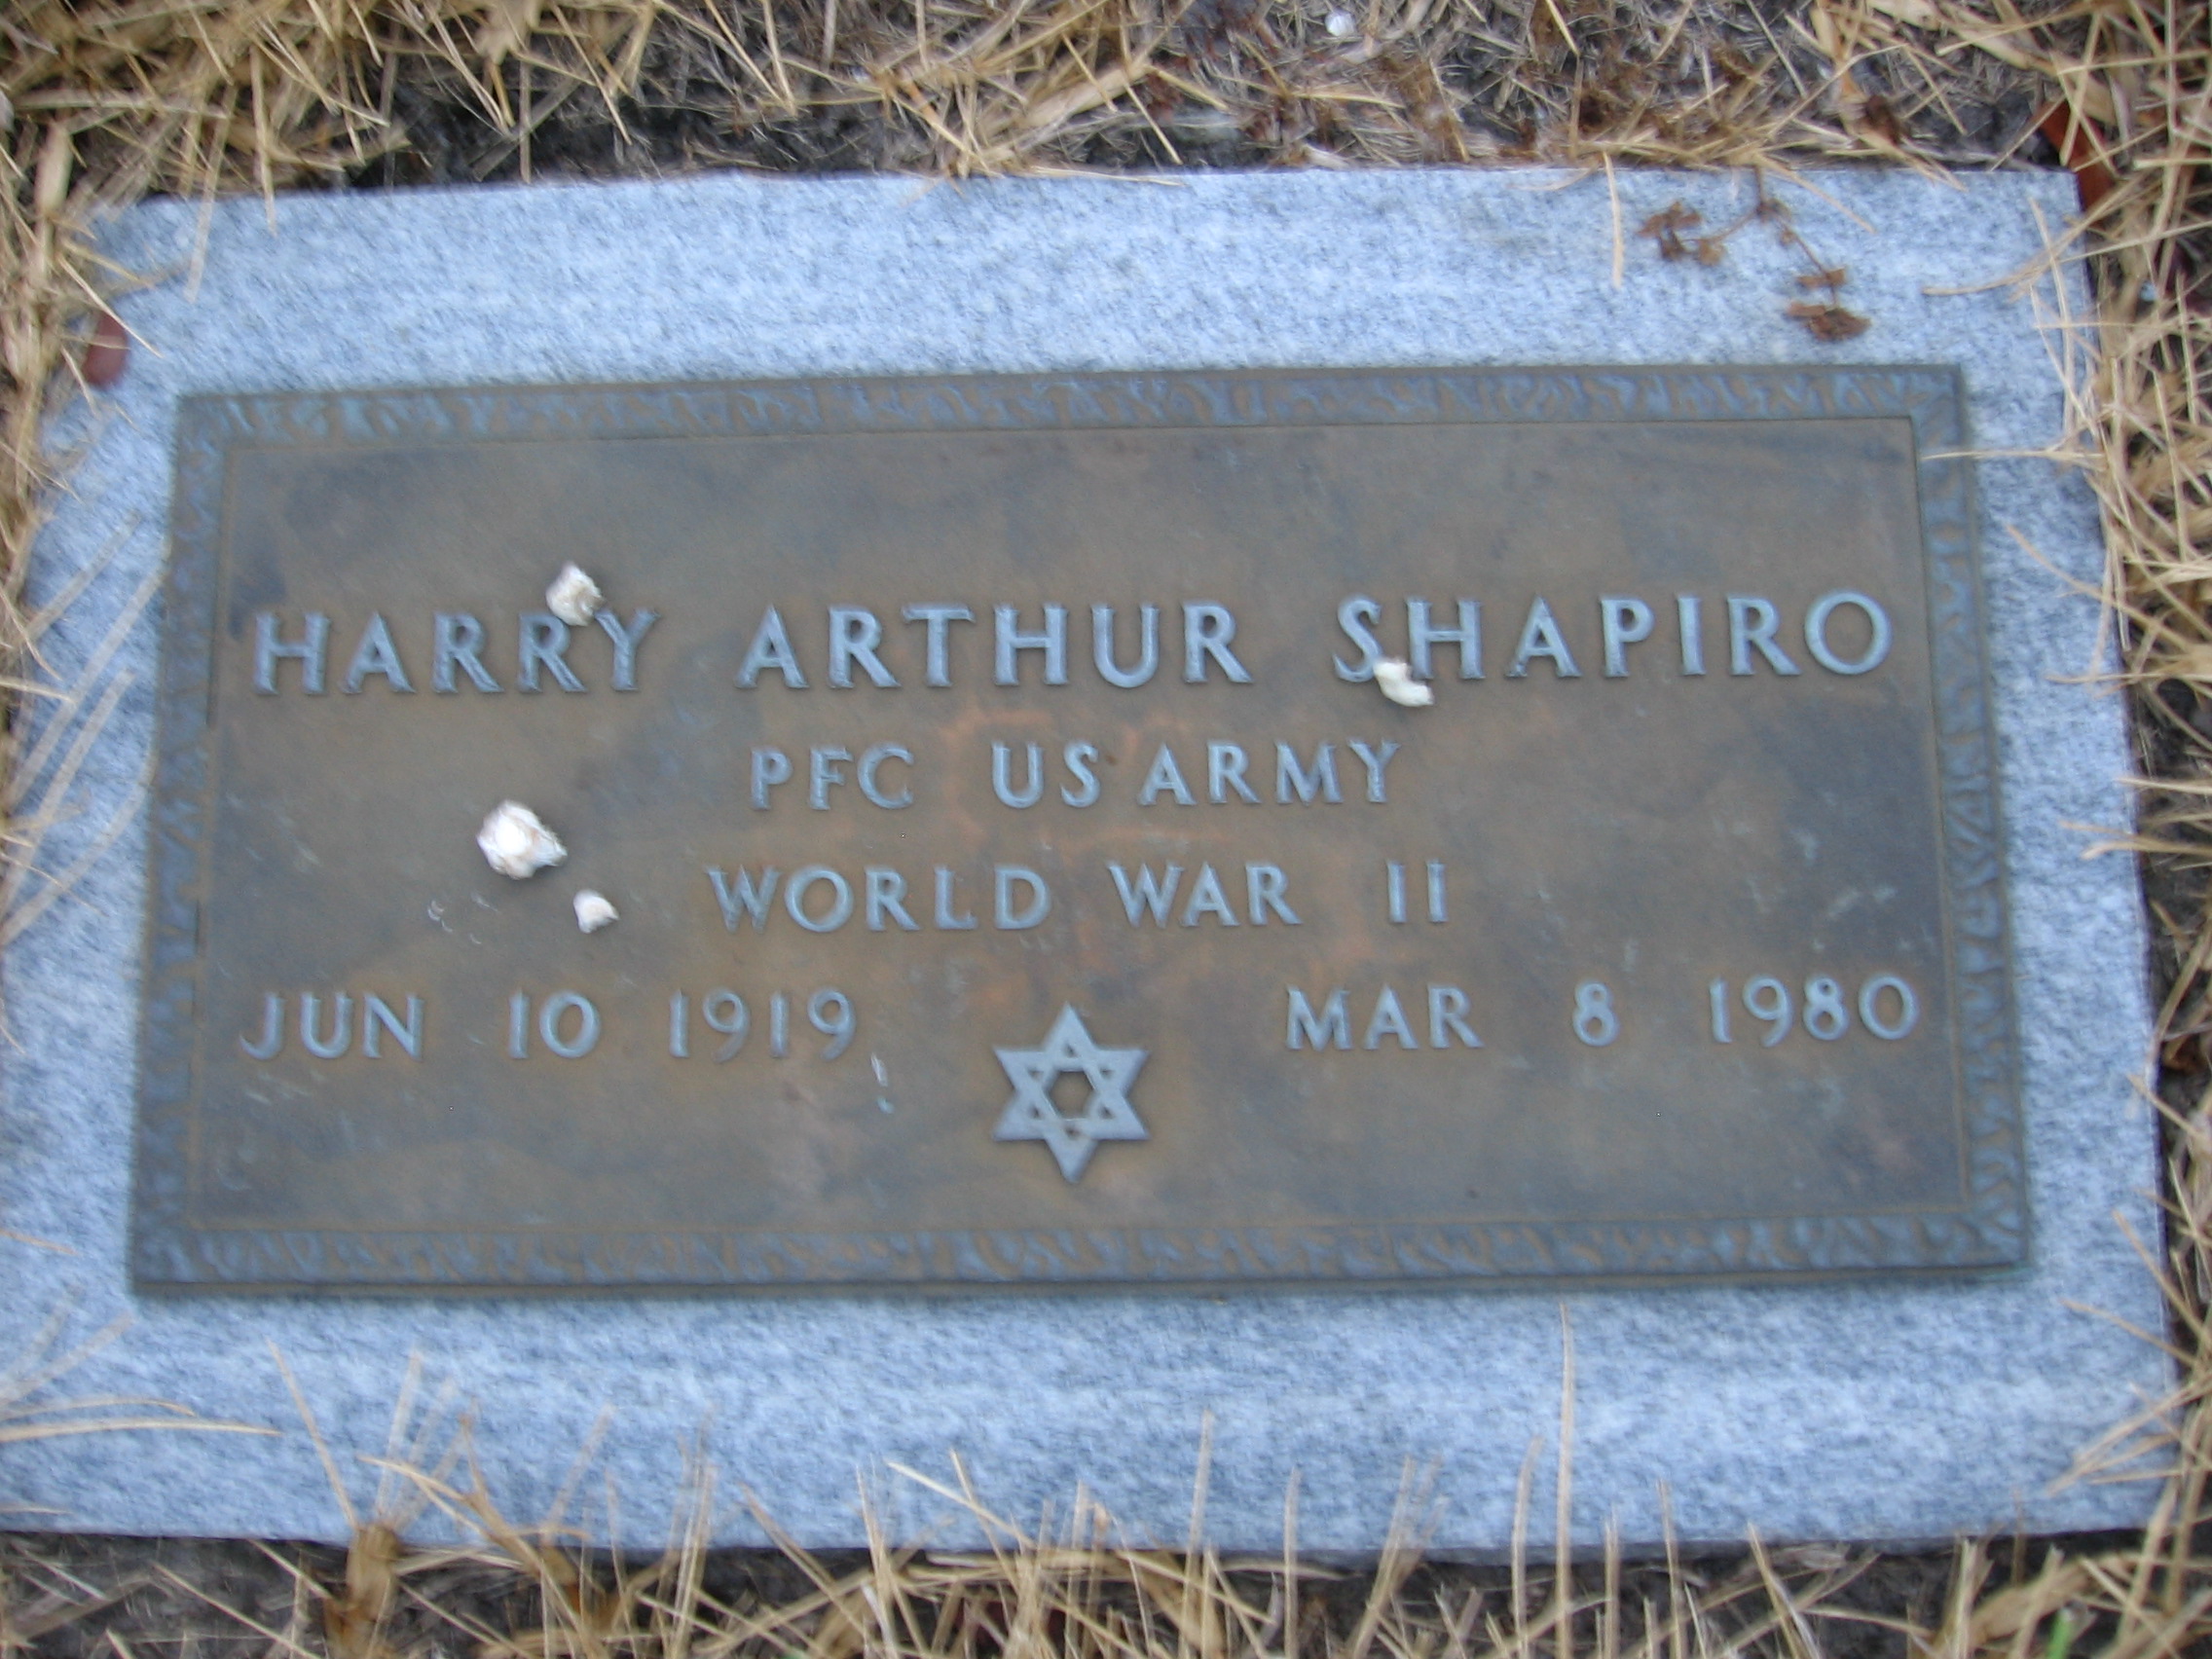 PFC Harry Arthur Shapiro